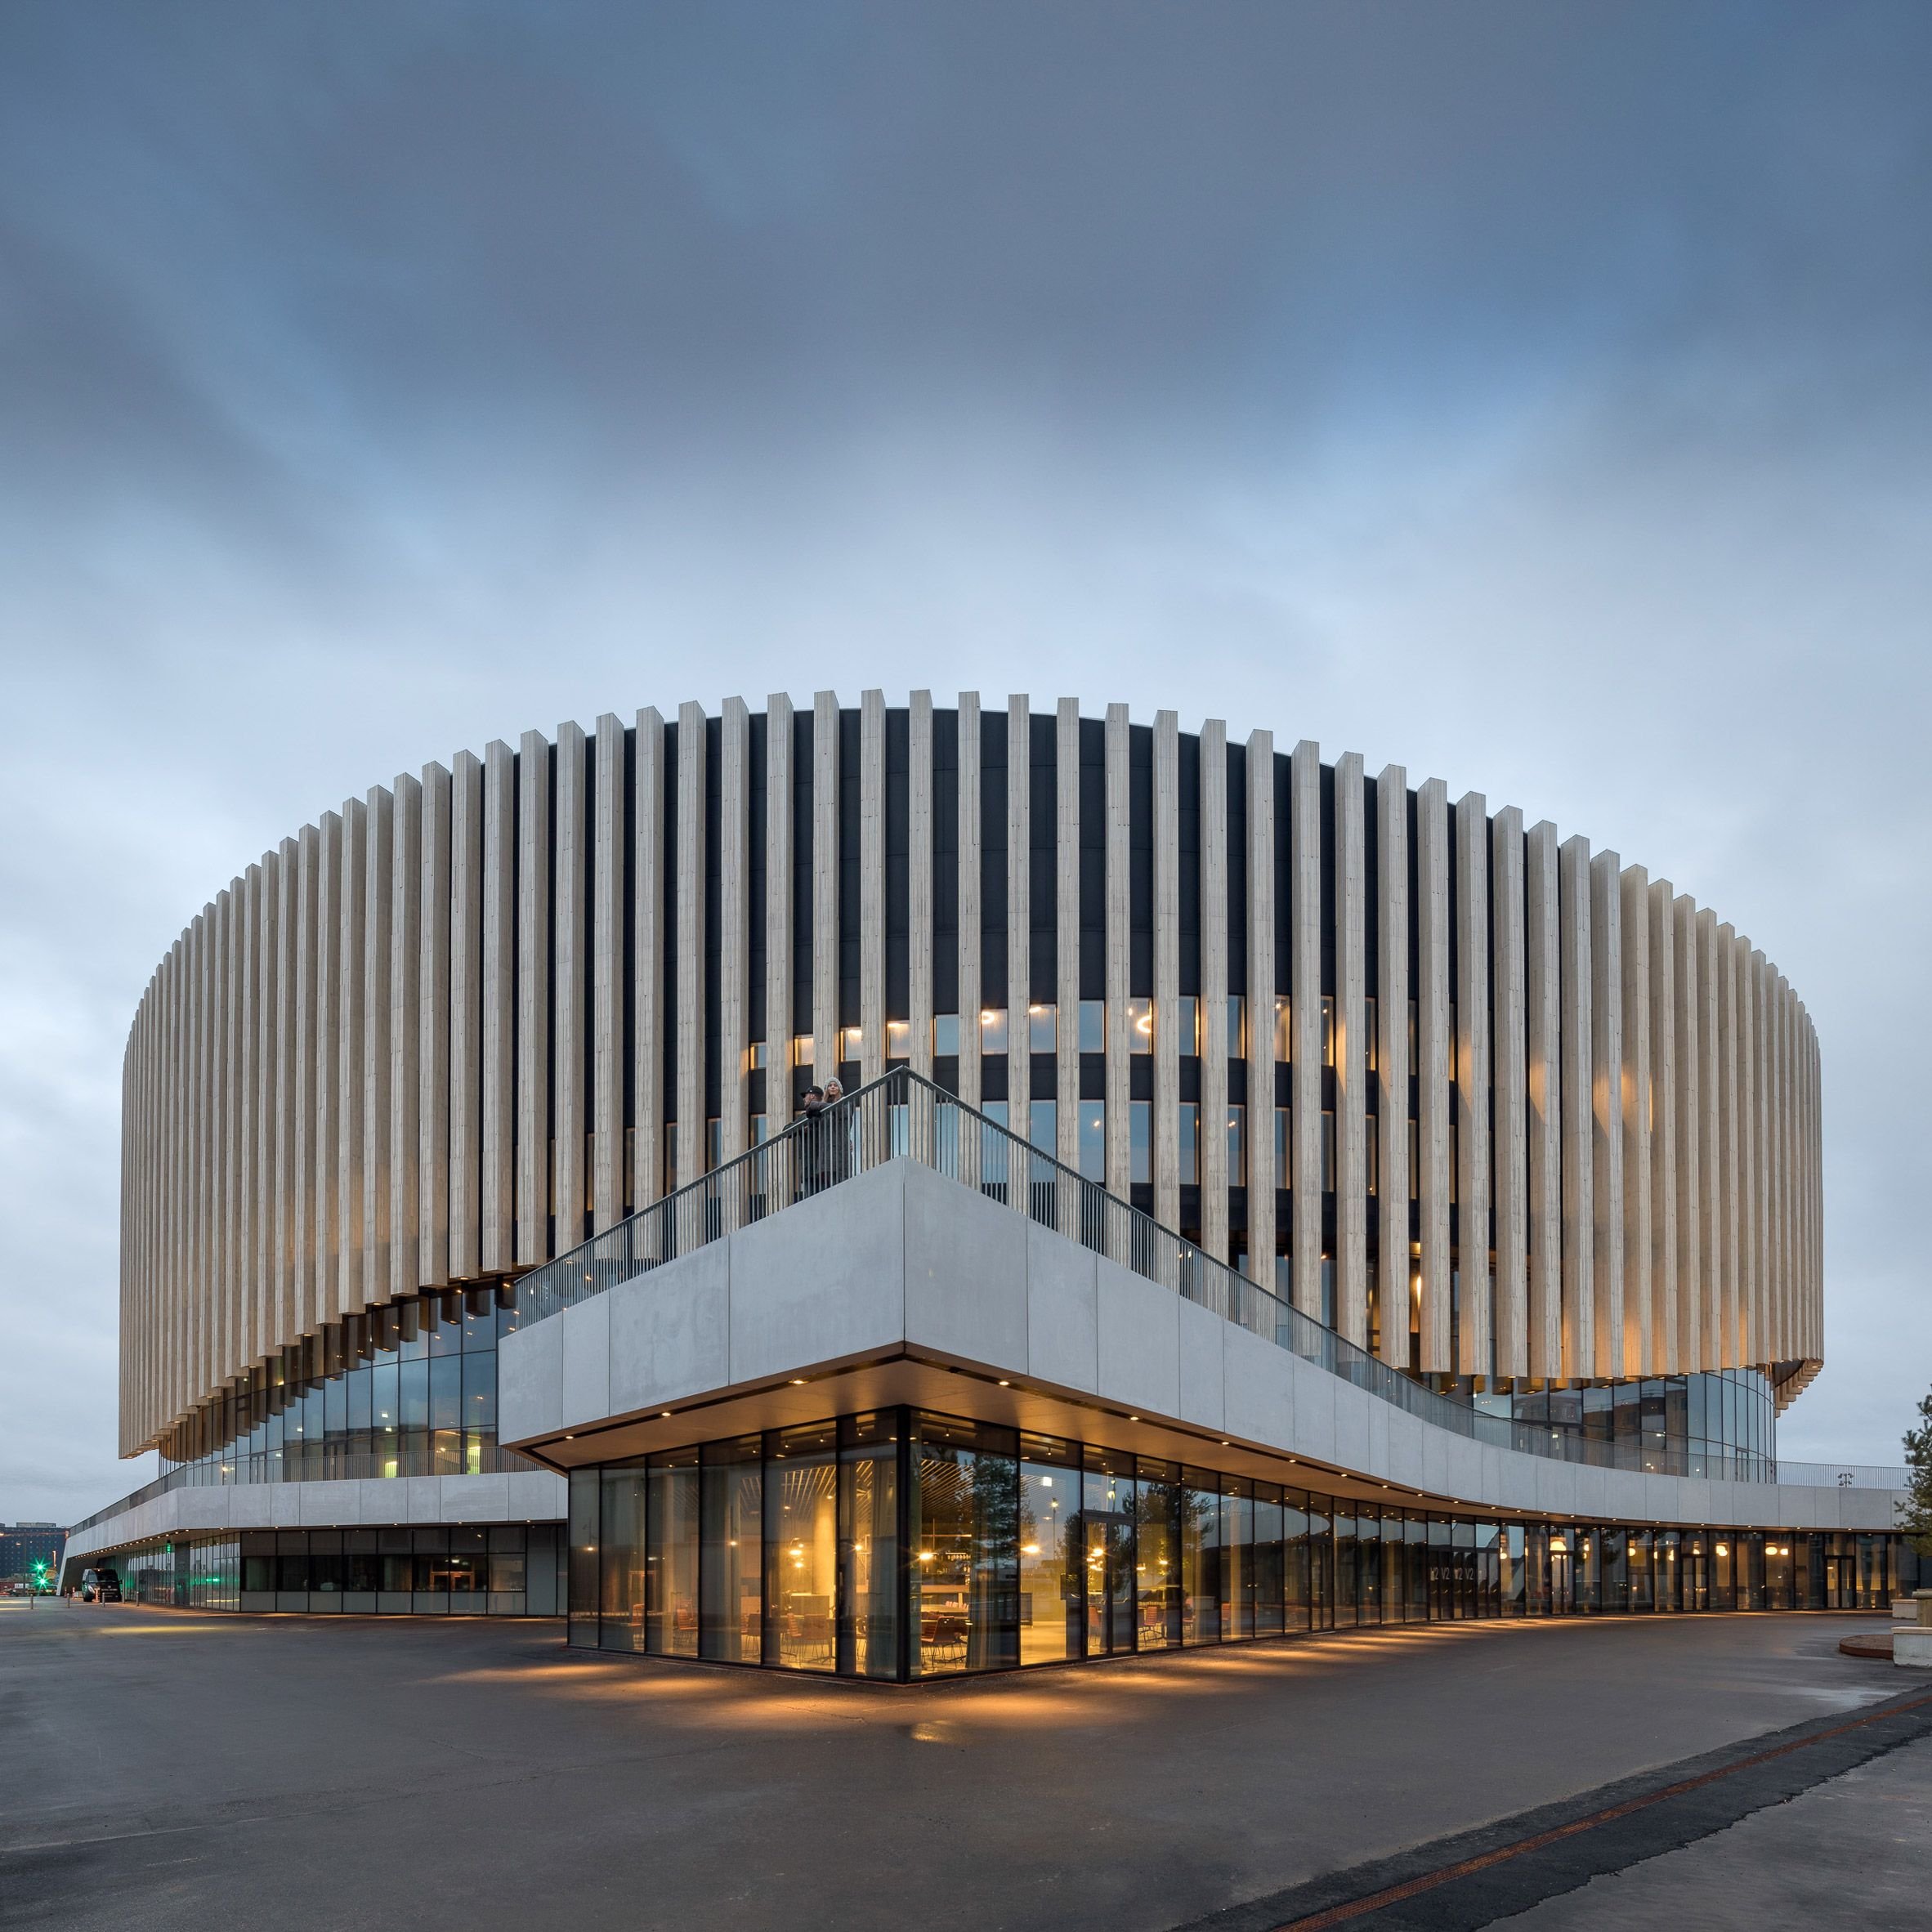 Архитектура зданий театров. Концертный зал архитектура Голландия. Арена в Германии архитектура.